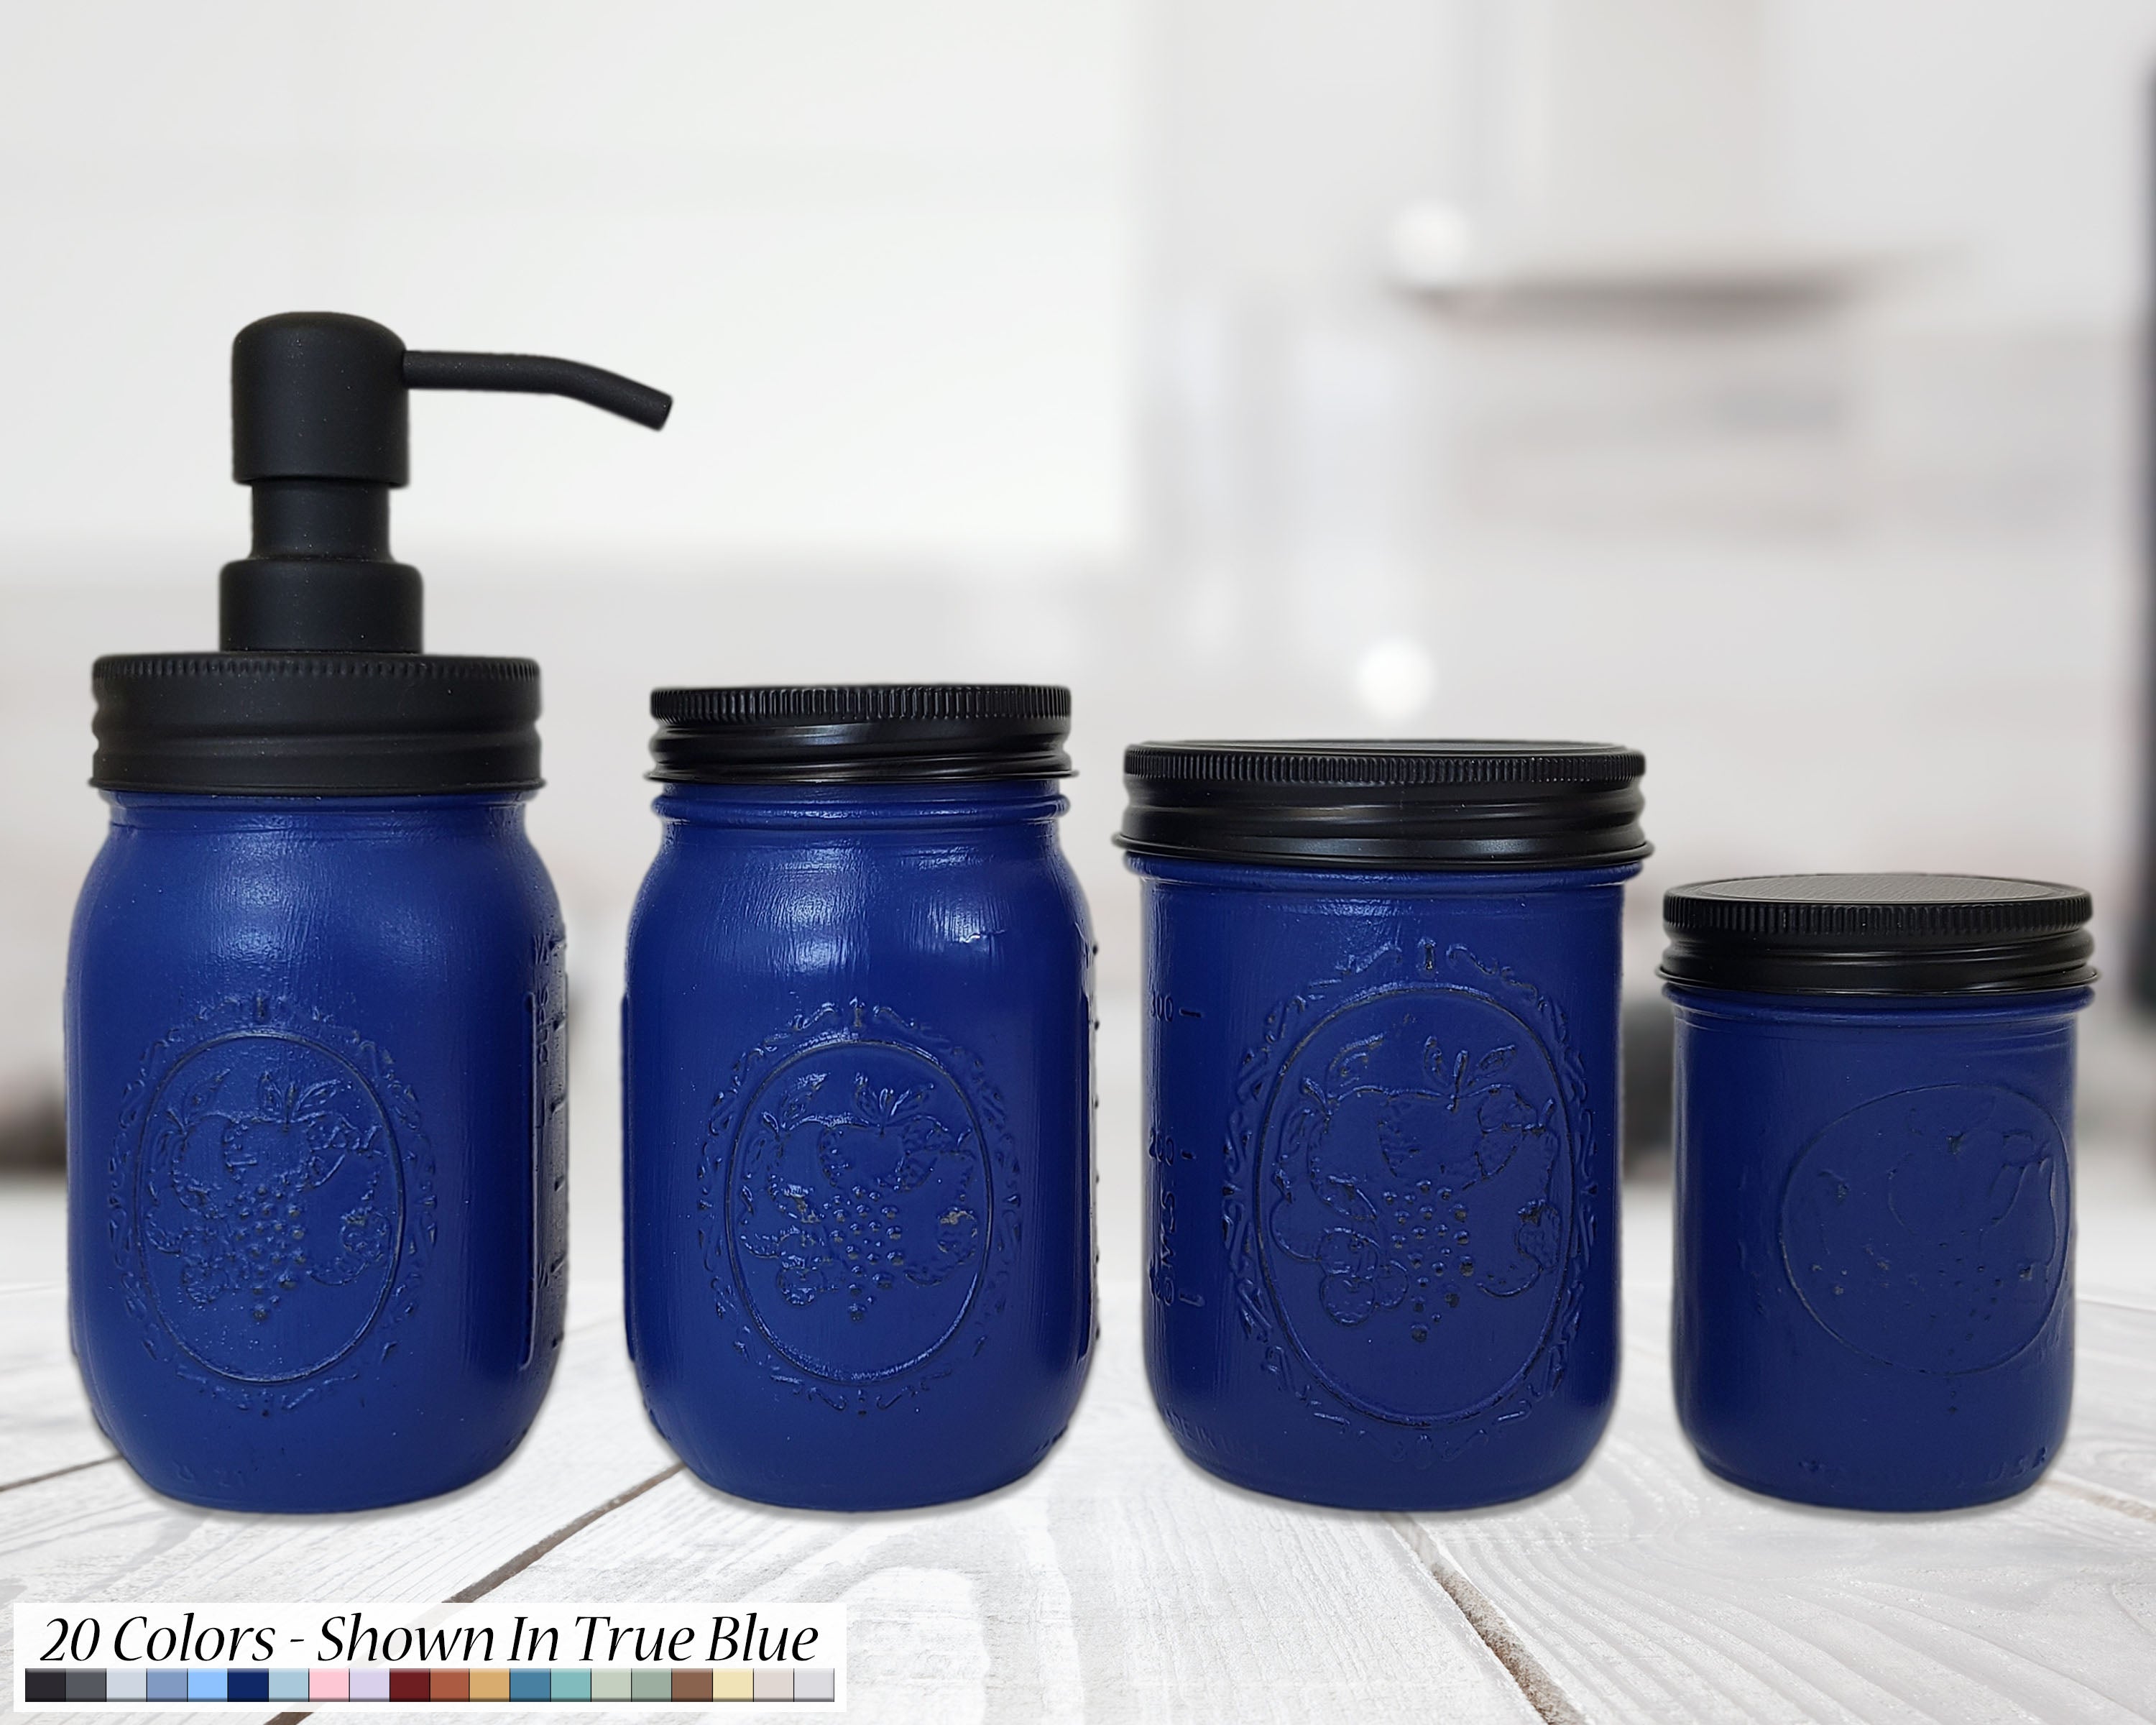 Custom Painted Mason Jar Bathroom Set, 20 Paint Colors, Shown in True Blue with Black Lids